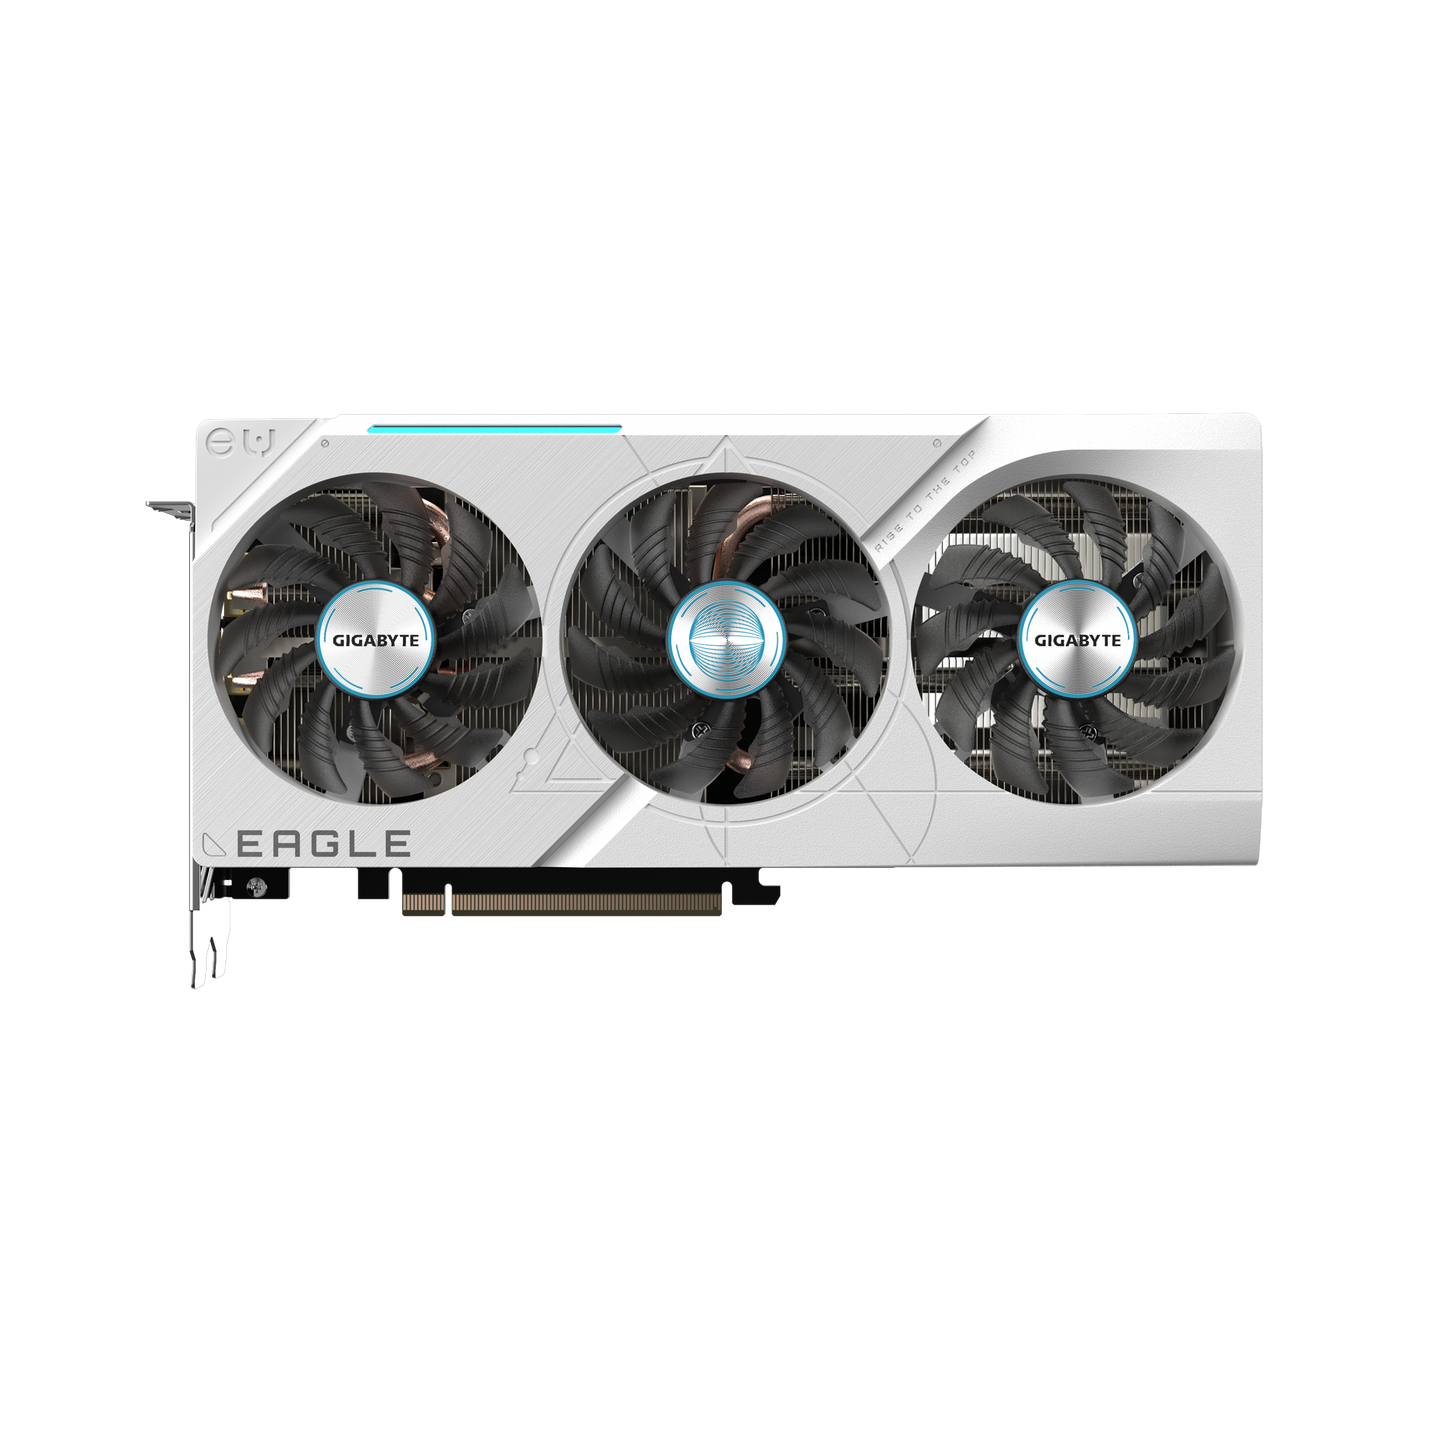 Nvidia GeForce RTX 4070 SUPER EAGLE OC ICE 12G GDDR6X 192 bit/2535MHz/PCI-E 4.0/Max Res 7680x4320/3x DP 1.4a & 1x HDMI 2.1a